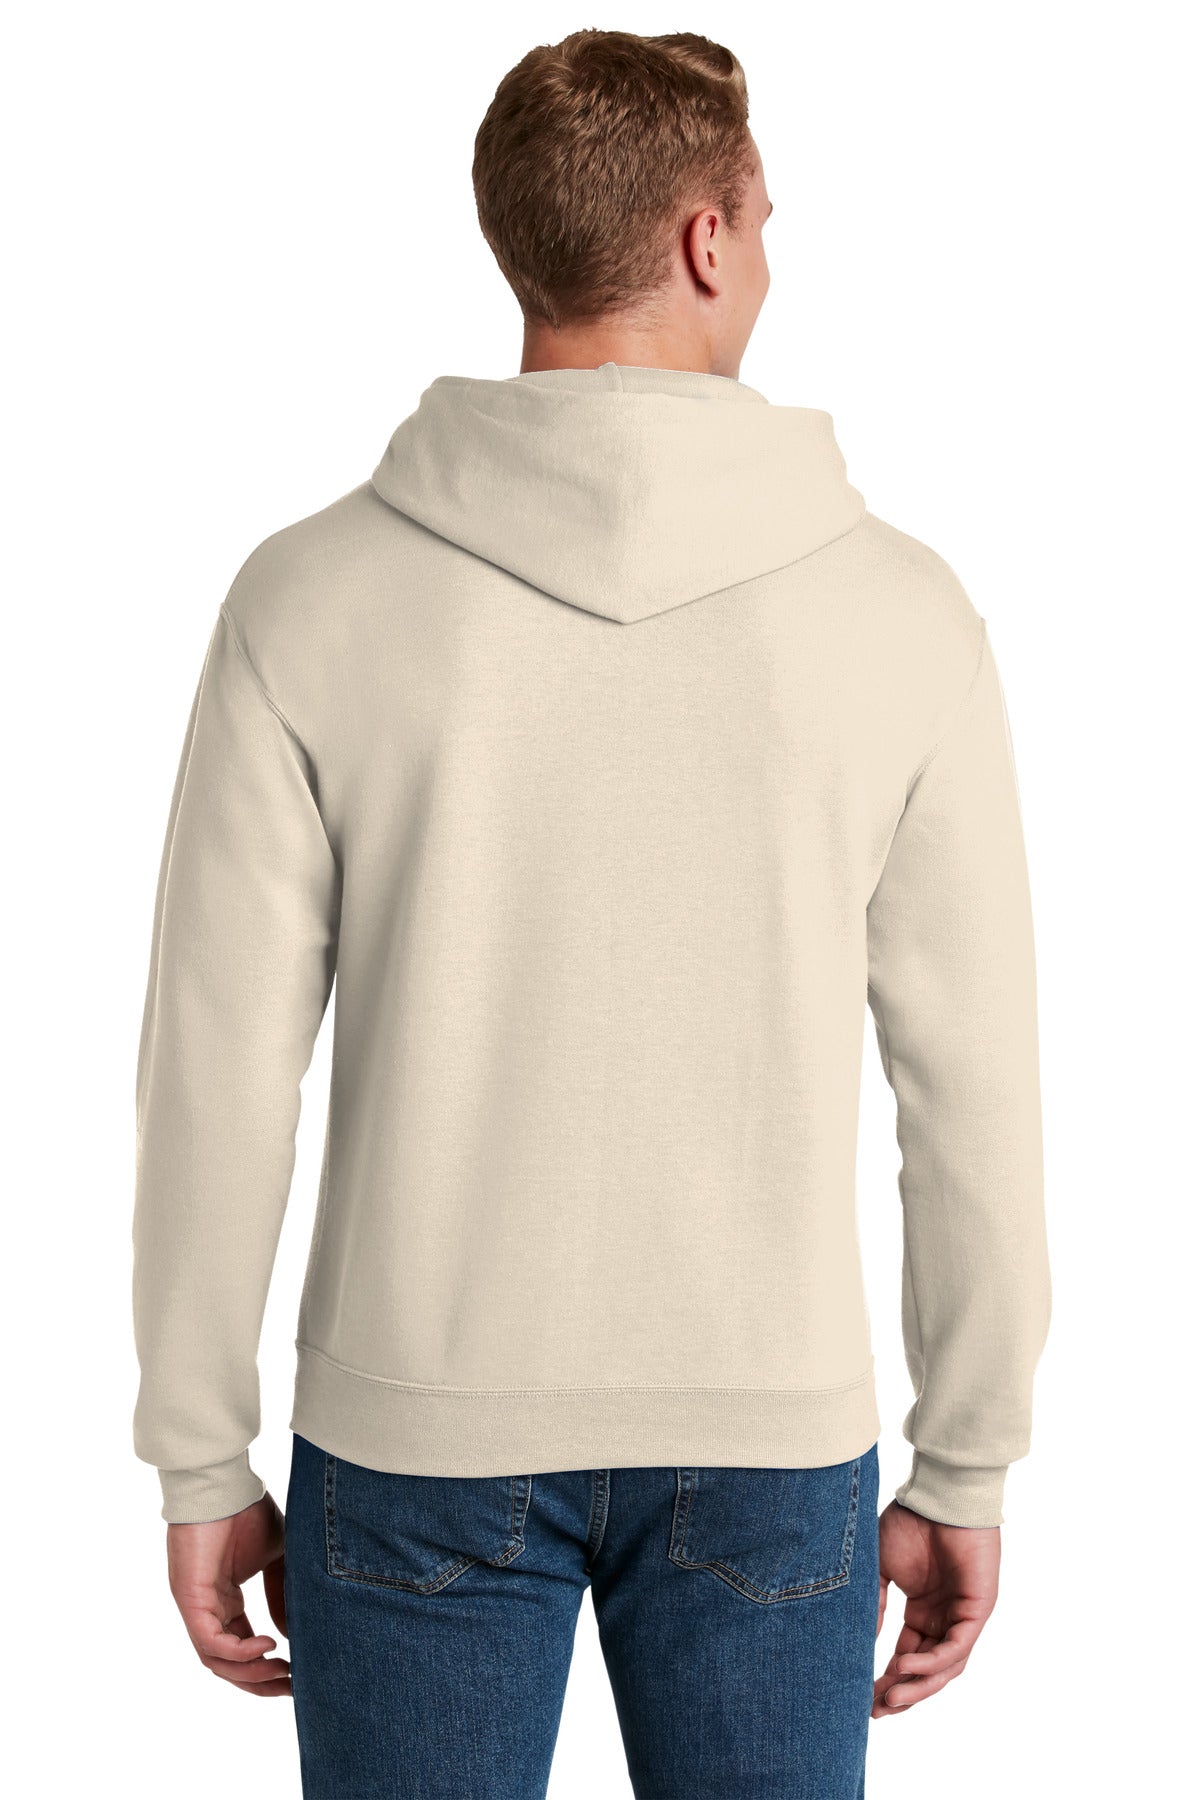 Jerzees - NuBlend Pullover Hooded Sweatshirt. 996M - Sweet Cream Heather